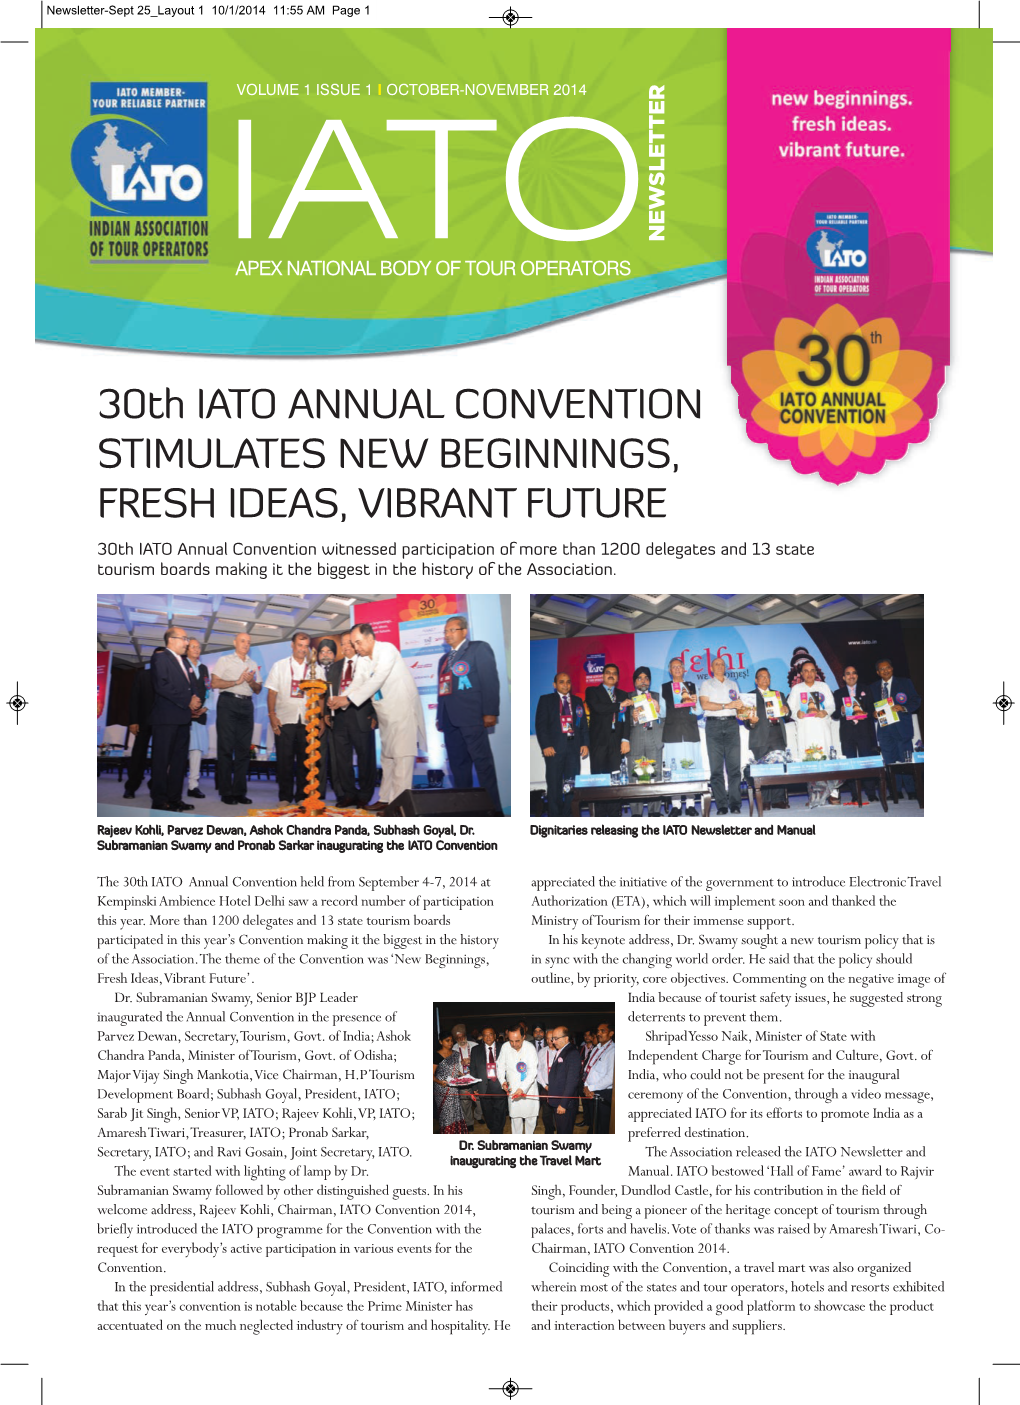 30Th IATO Annual Convention Stimulates New Beginnings, Fresh Ideas, Vibrant Future